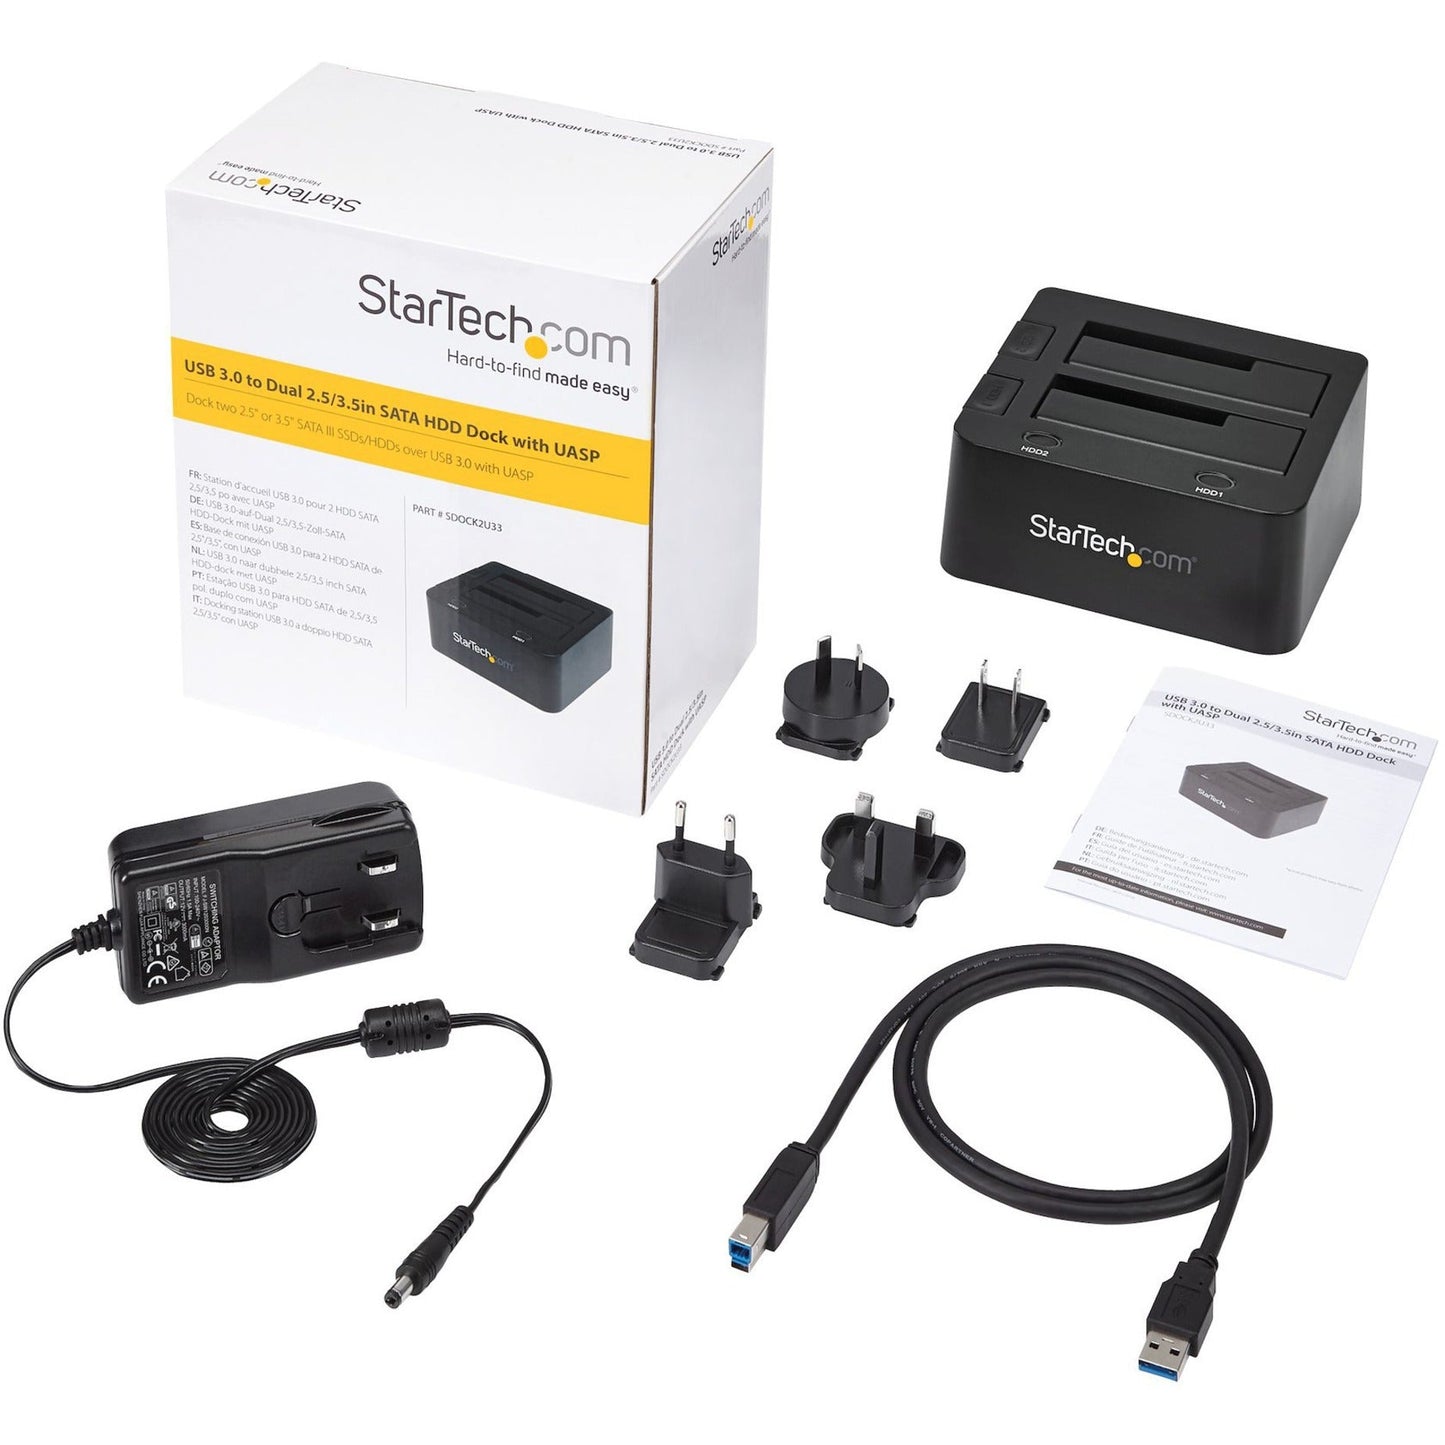 StarTech.com Dual-Bay USB 3.0 to SATA Hard Drive Docking Station 2.5/3.5" SATA I/II/III SSD/HDD Dock USB Hard Drive Bay Top-Loading